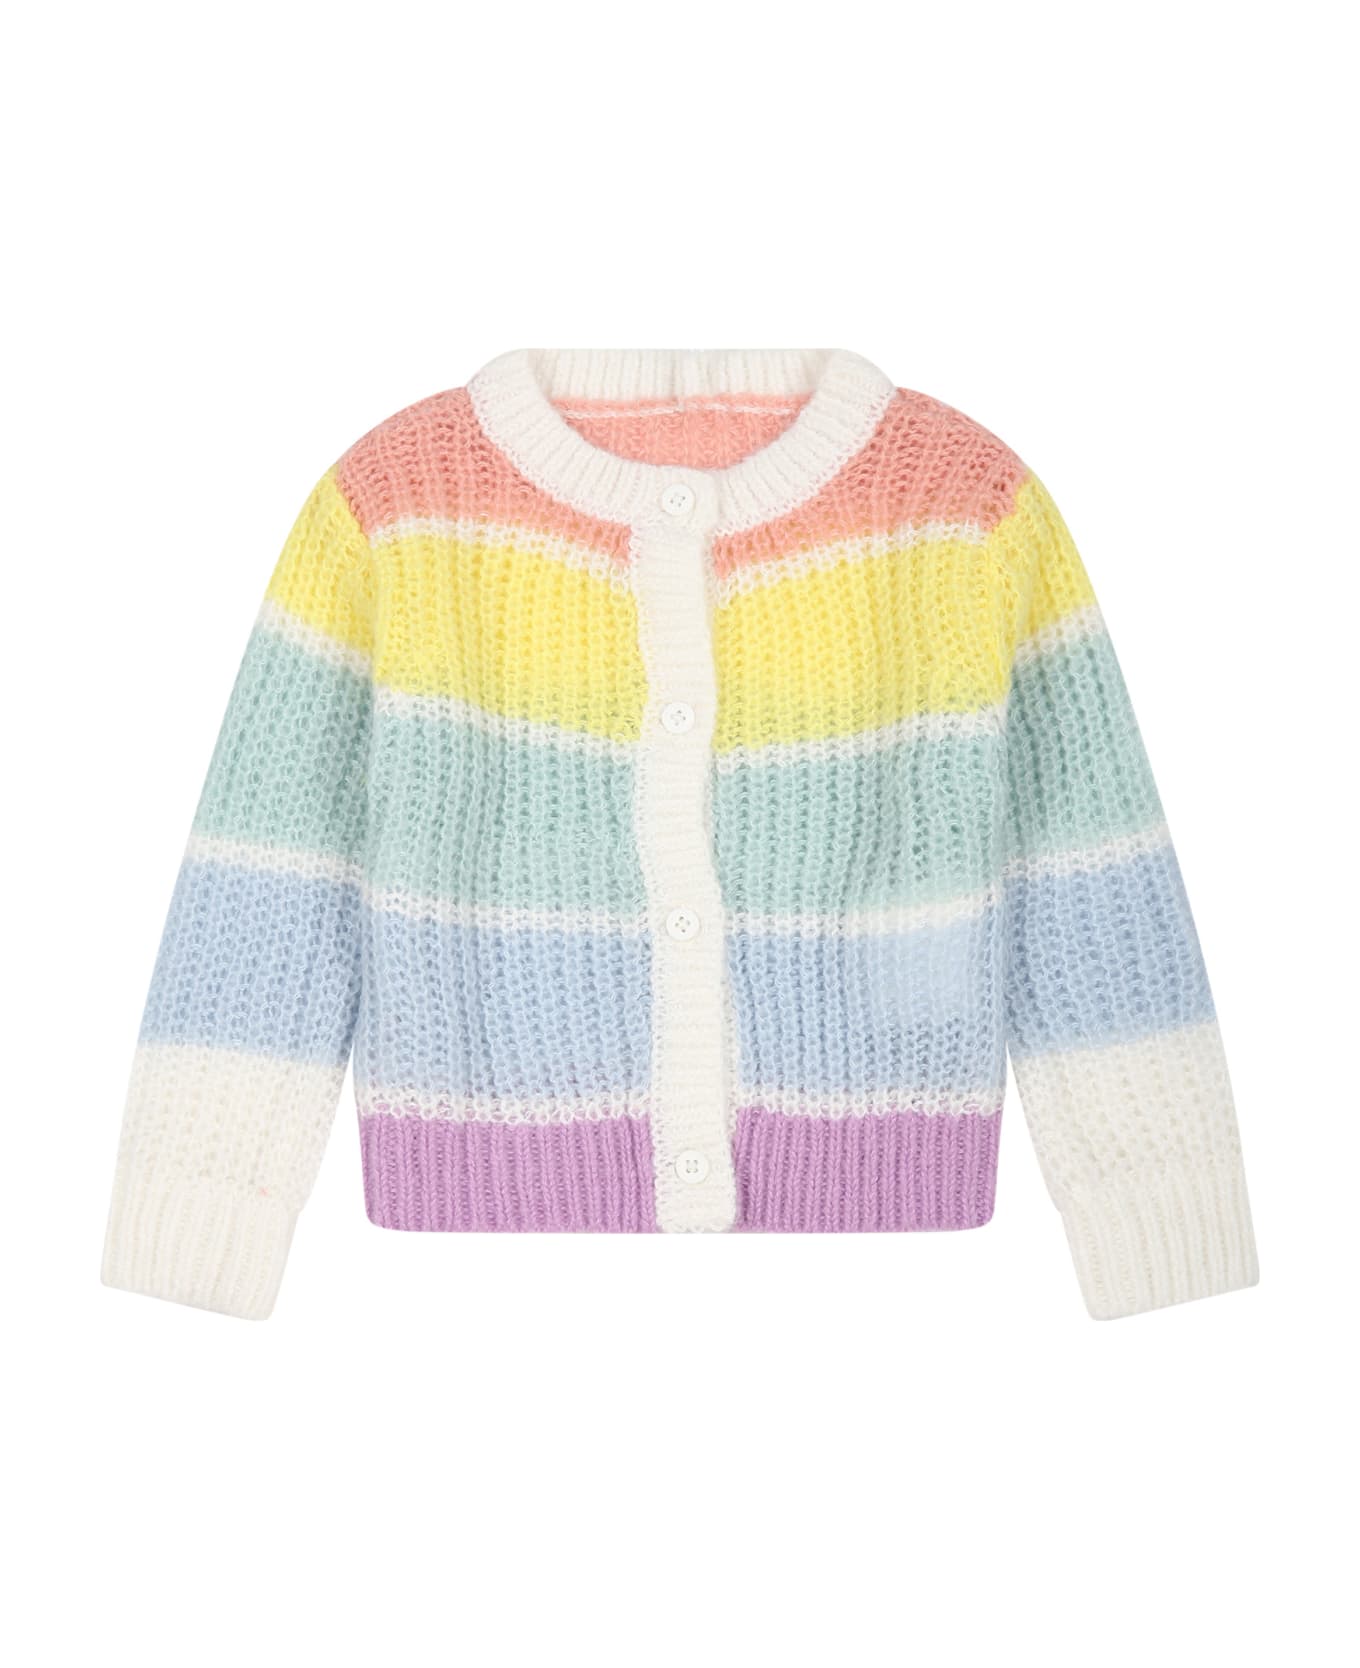 Stella McCartney Kids Multicolor Cardigan For Baby Girl - Multicolor